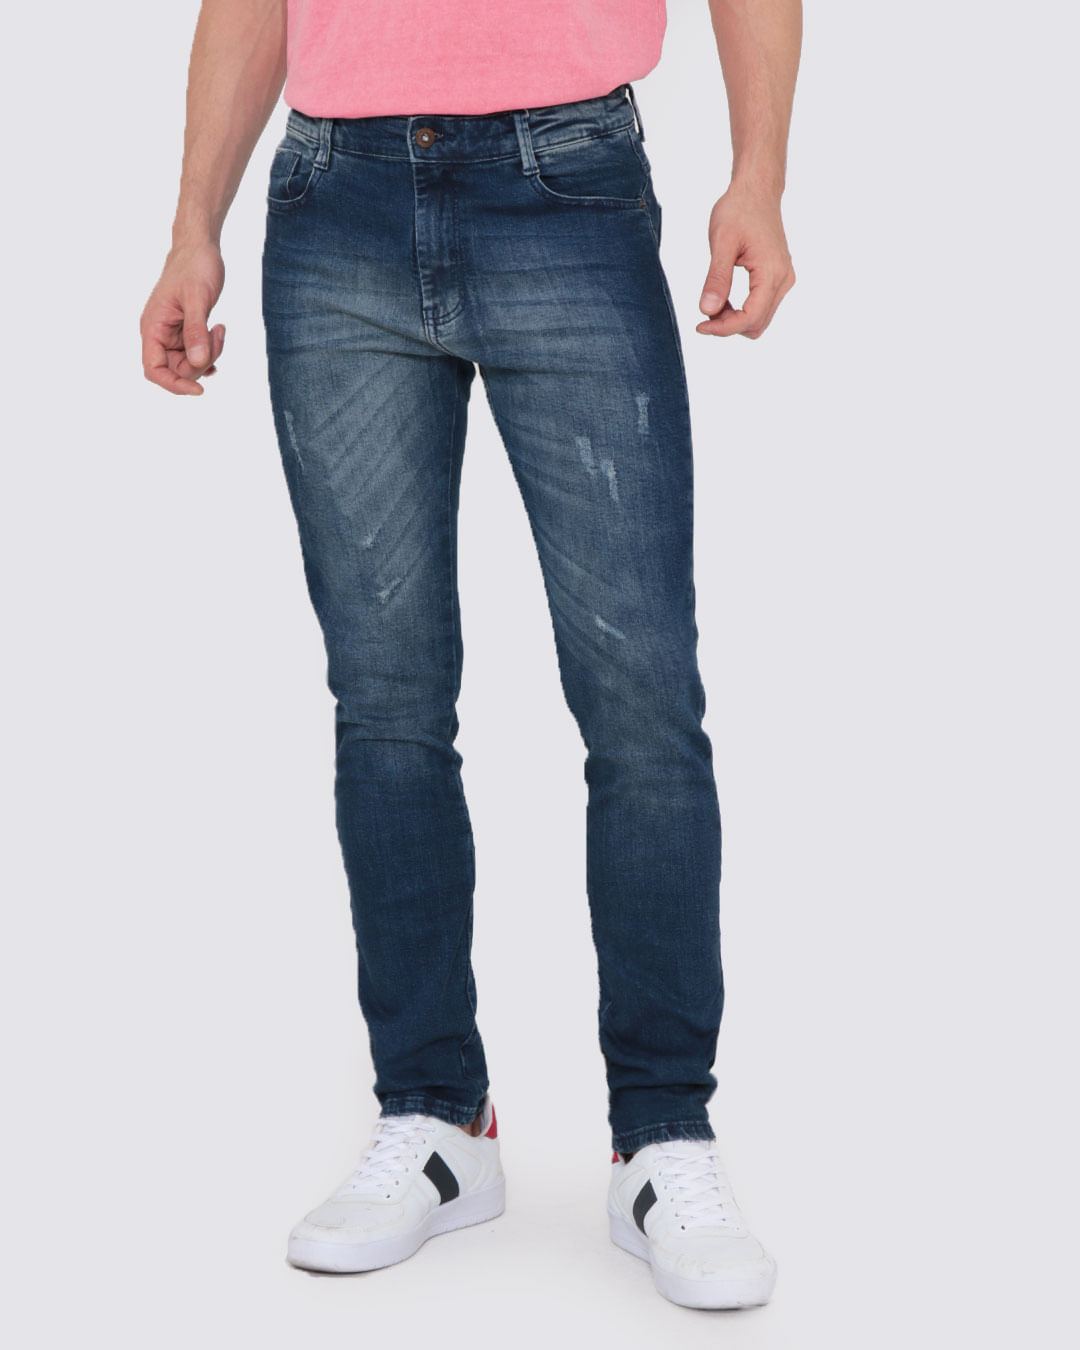 23221000411045-blue-jeans-medio-1